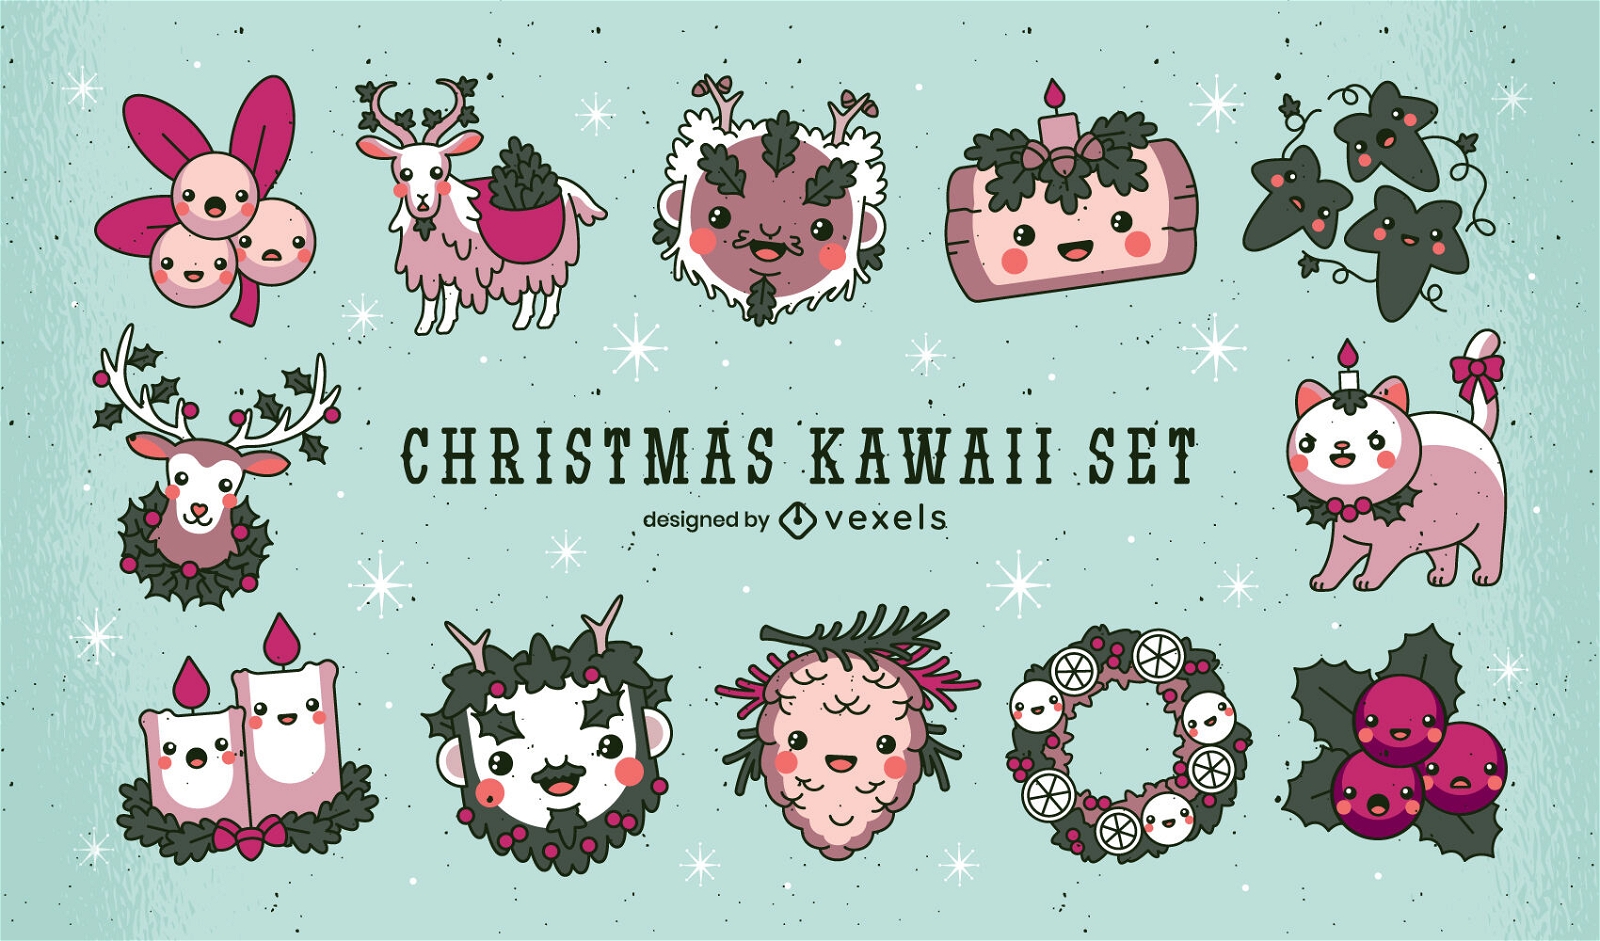 Conjunto de elementos do feriado de Natal kawaii